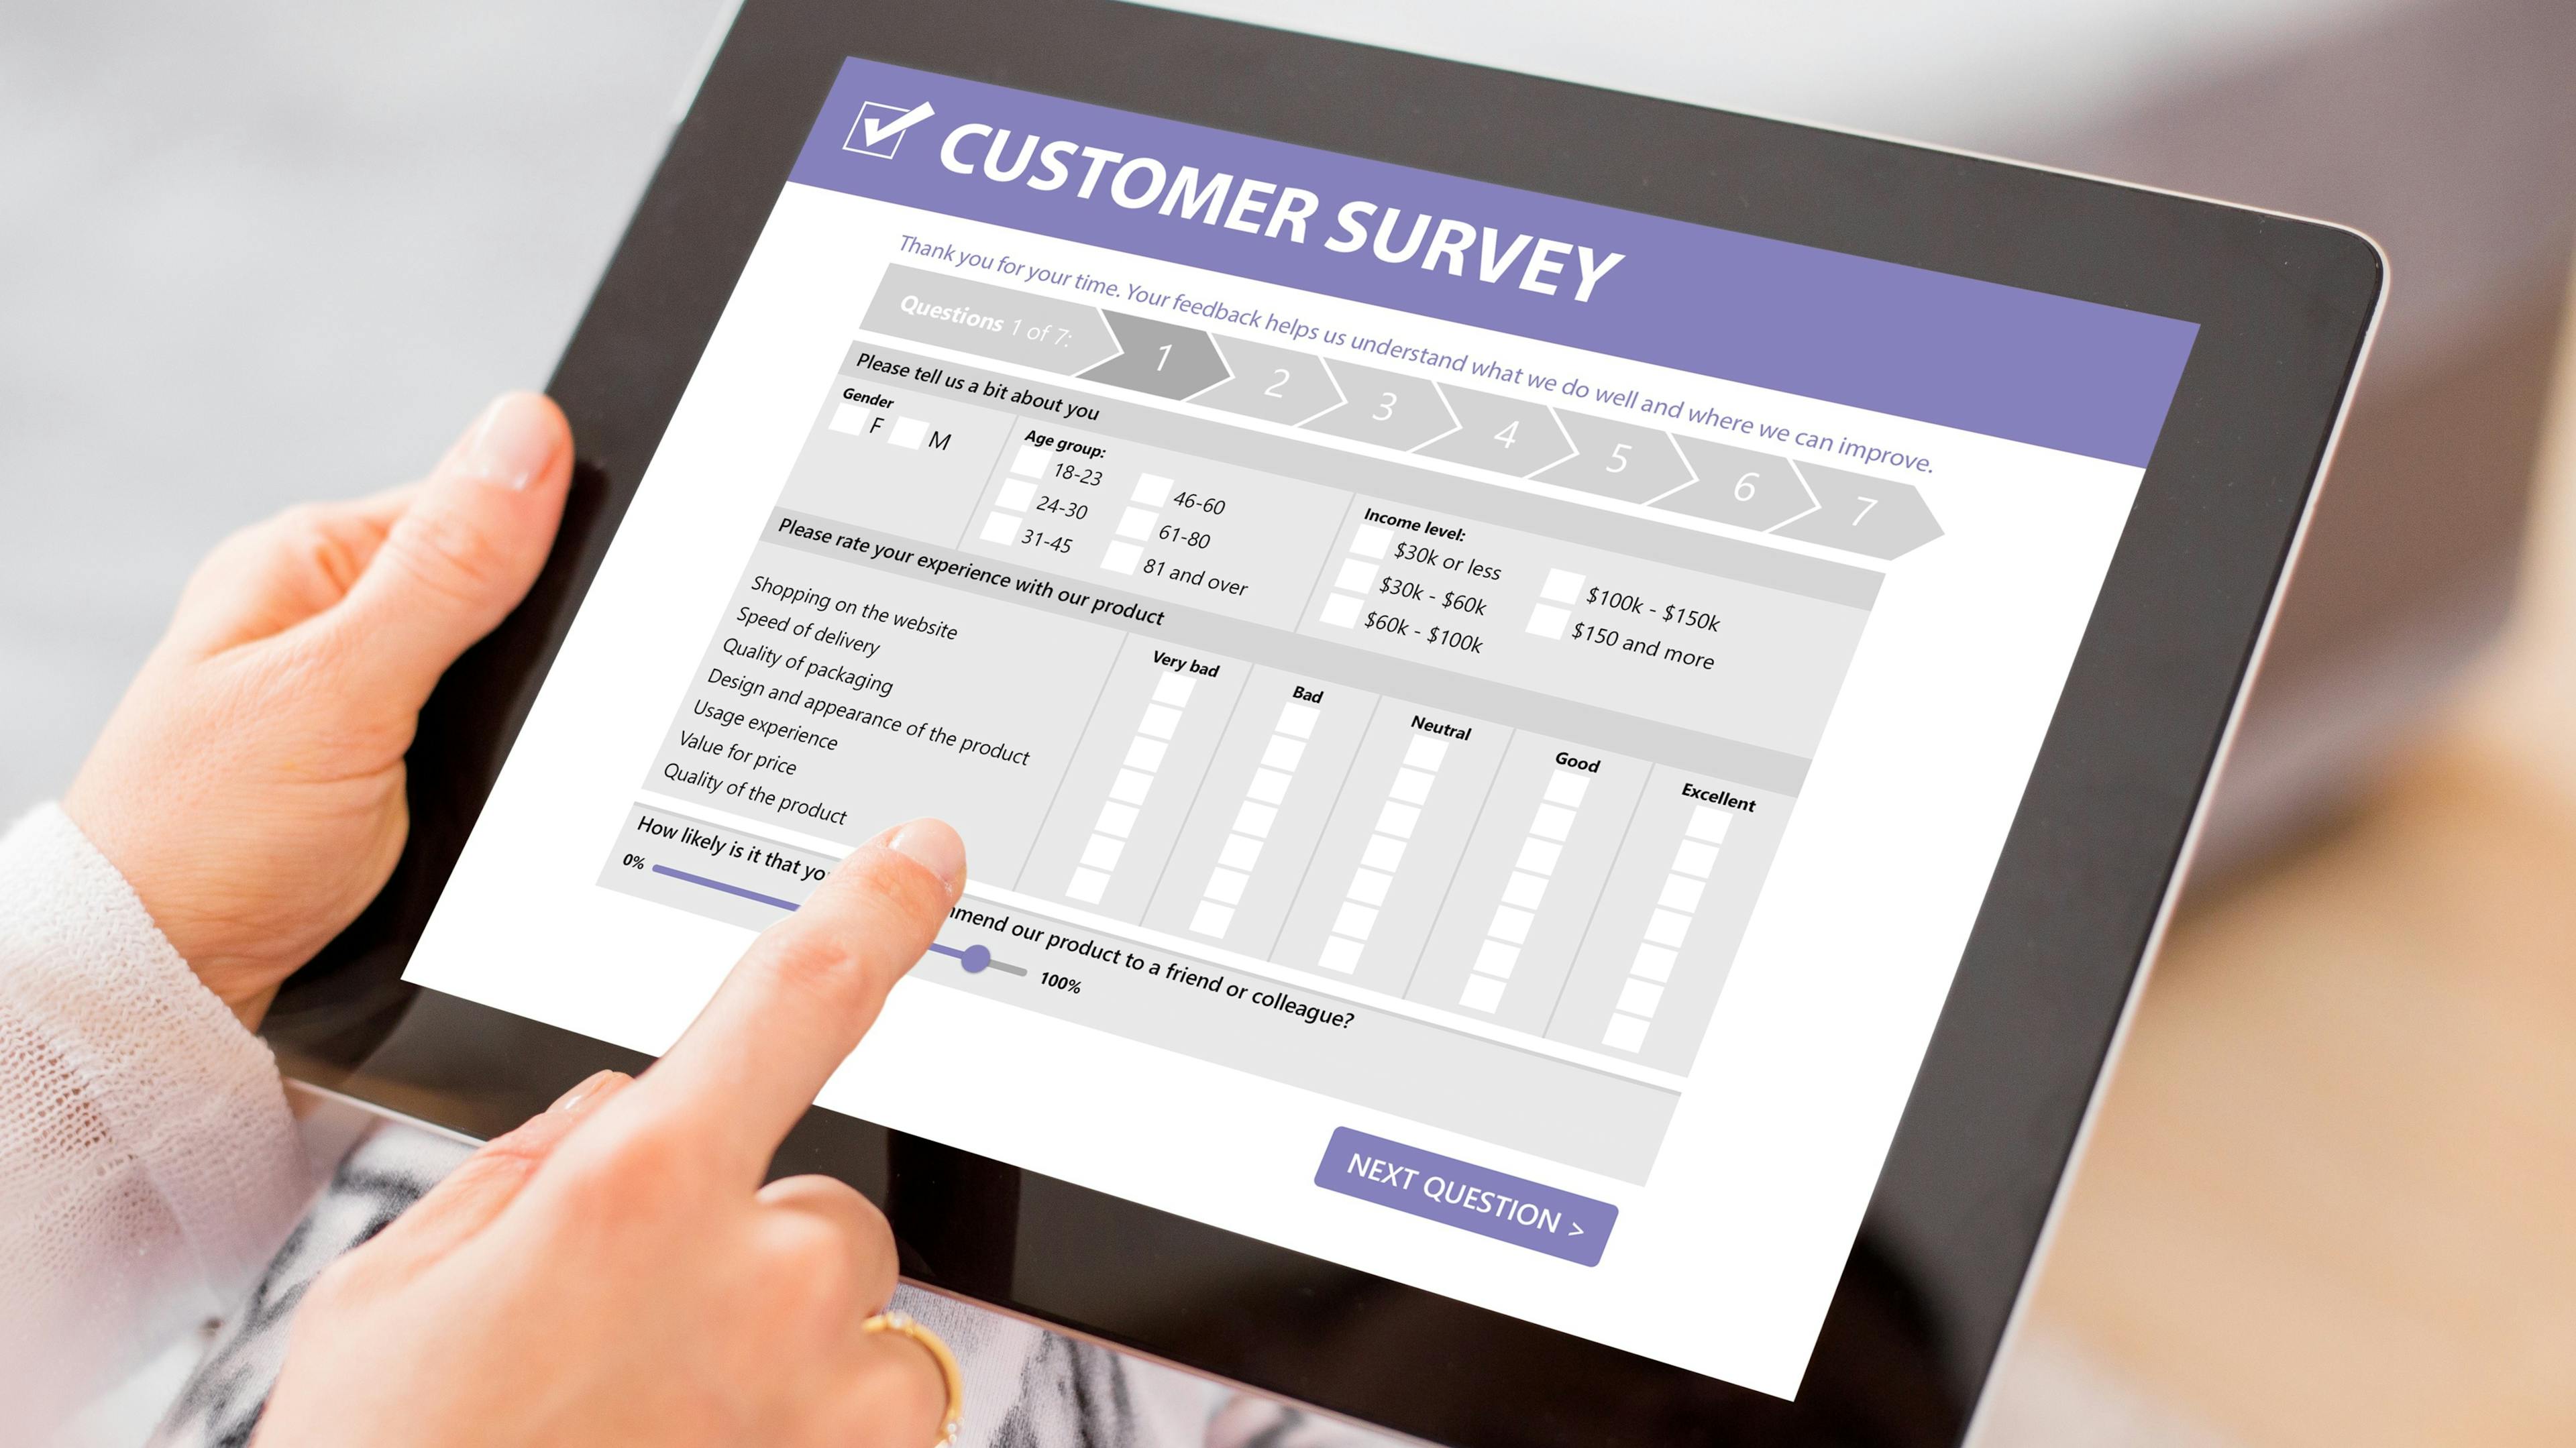 Image: Customer Survey